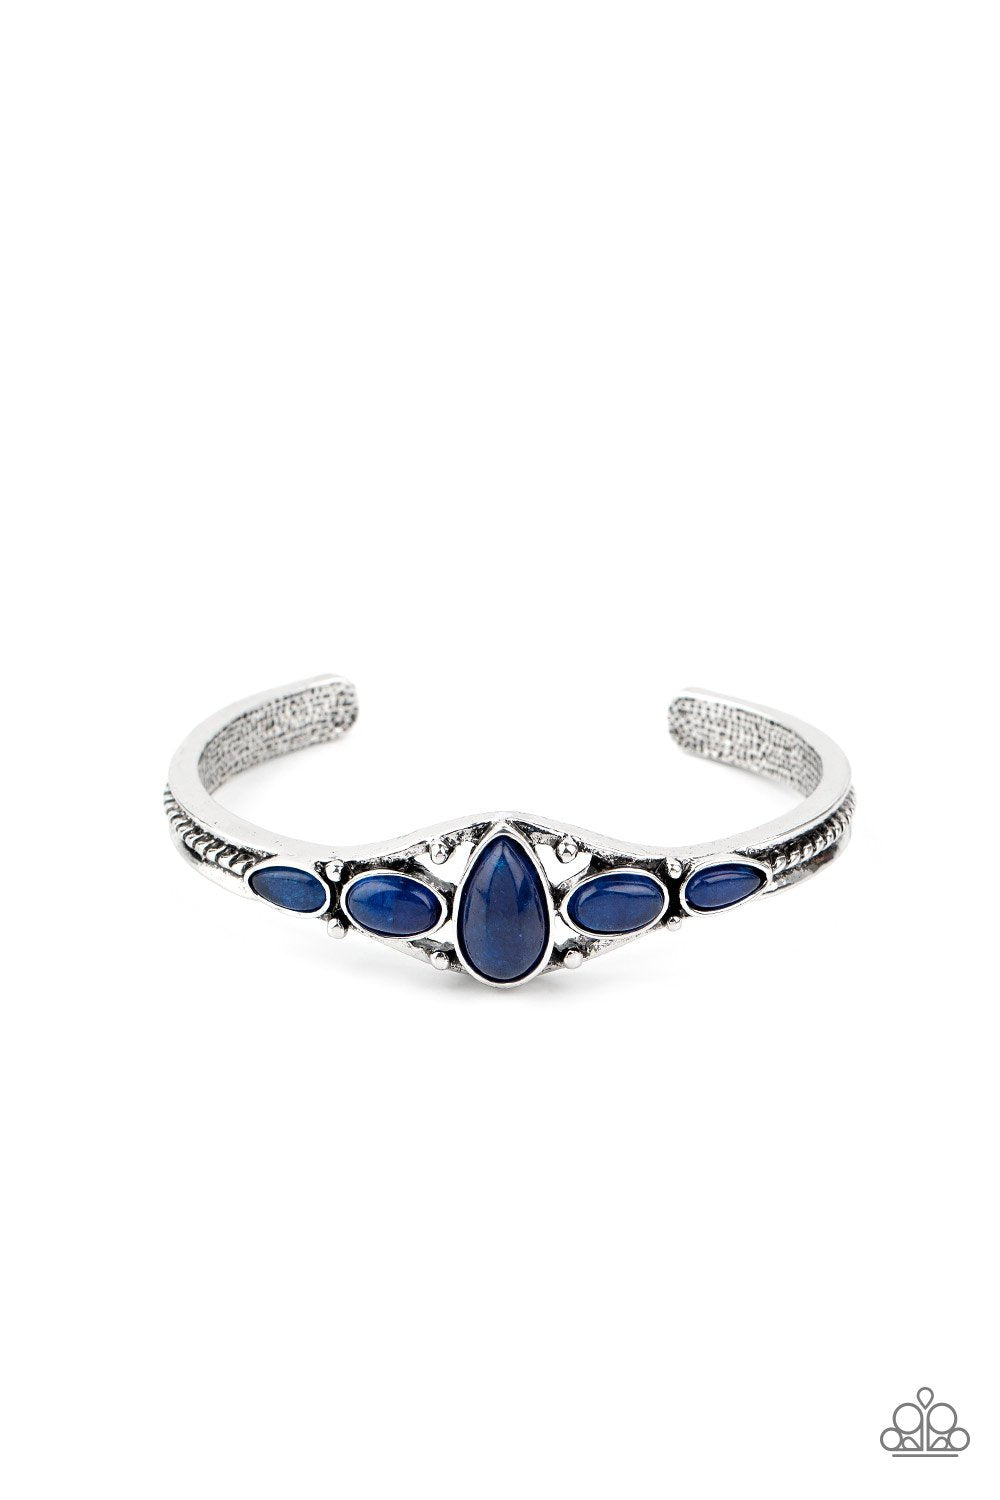 Dream Beam Blue Stone Cuff Bracelet - Paparazzi Accessories- lightbox - CarasShop.com - $5 Jewelry by Cara Jewels